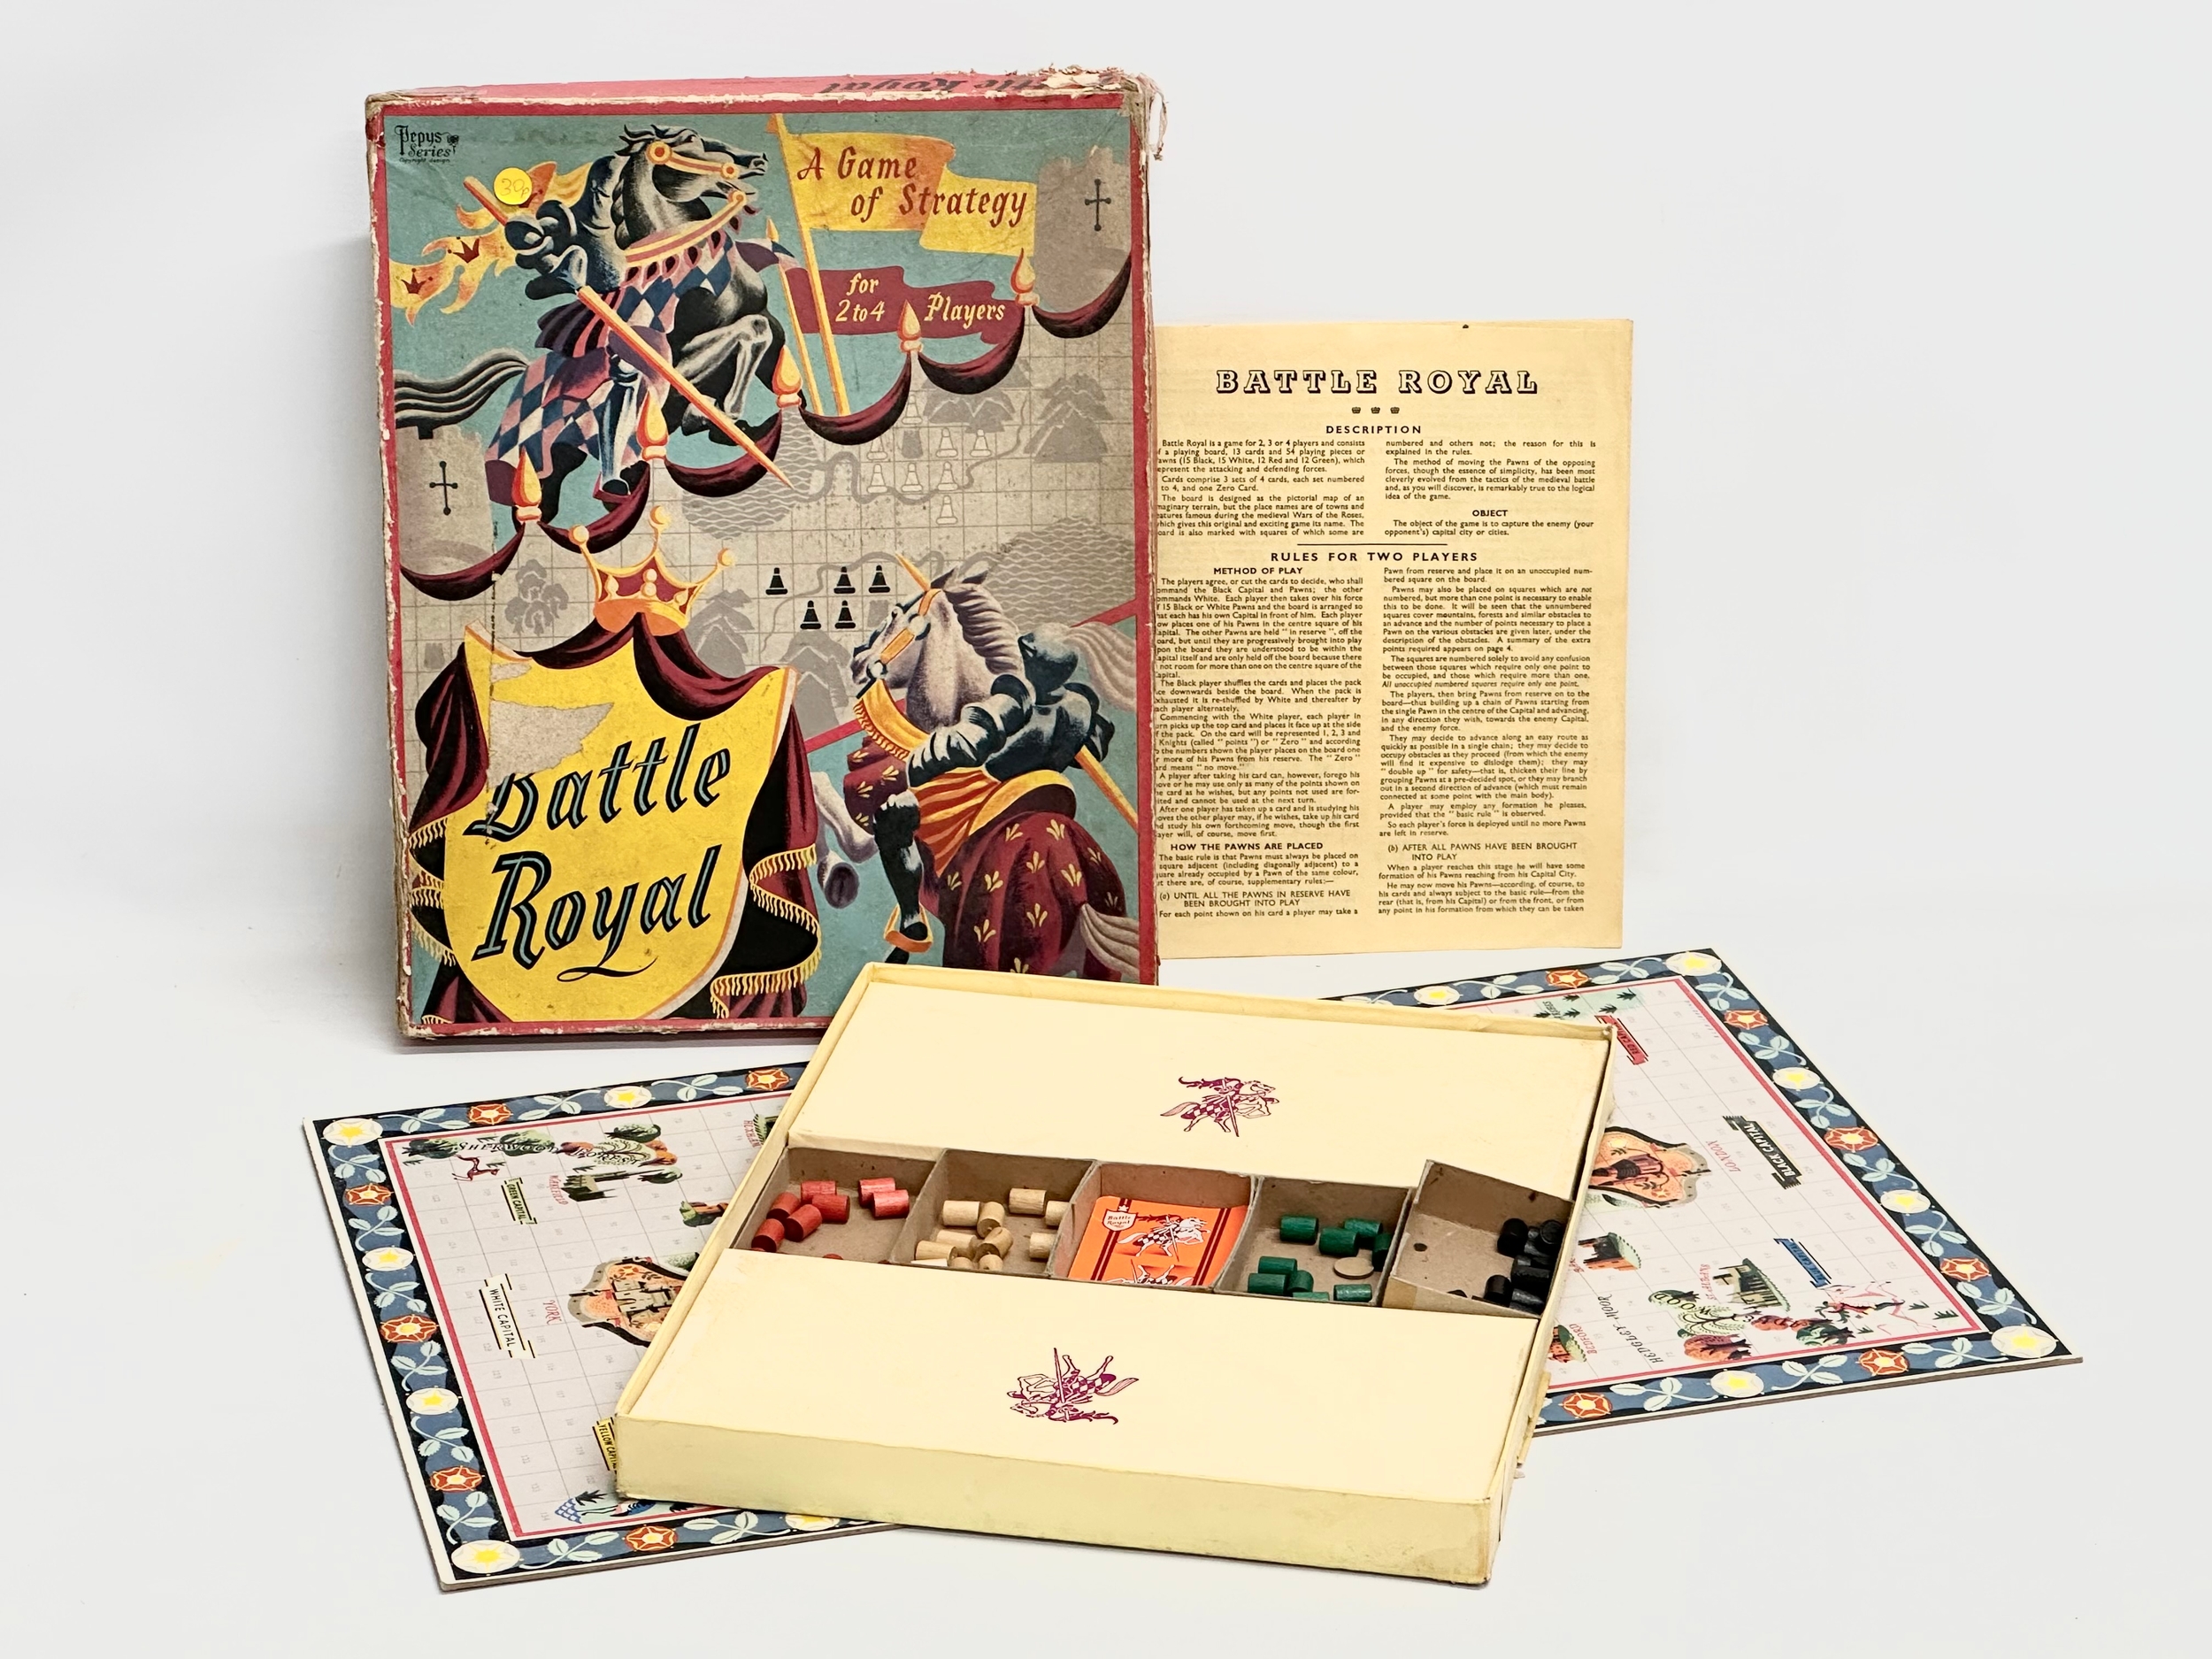 A vintage Pepys Series ‘Battle Royal’ board game.